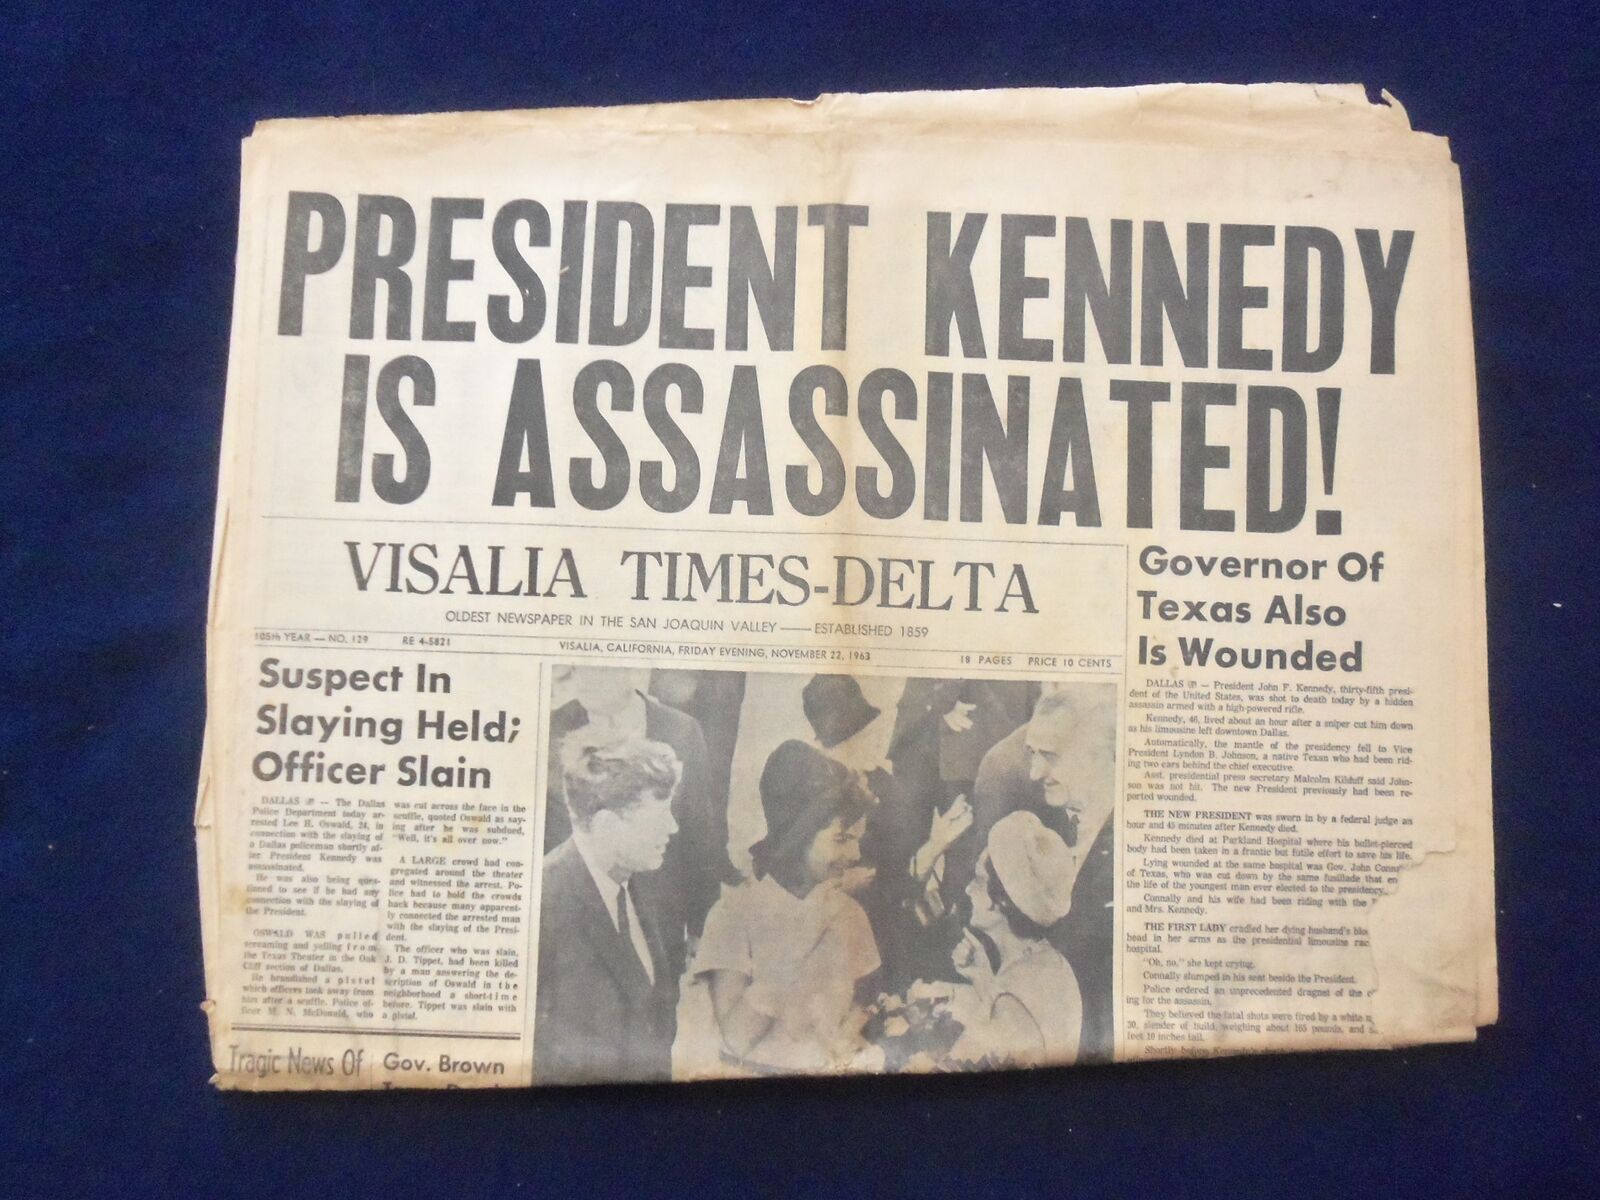 1963 NOV 22 VISALIA TIMES-DELTA NEWSPAPER-PRES. KENNEDY IS ASSASSINATED-NP 6433